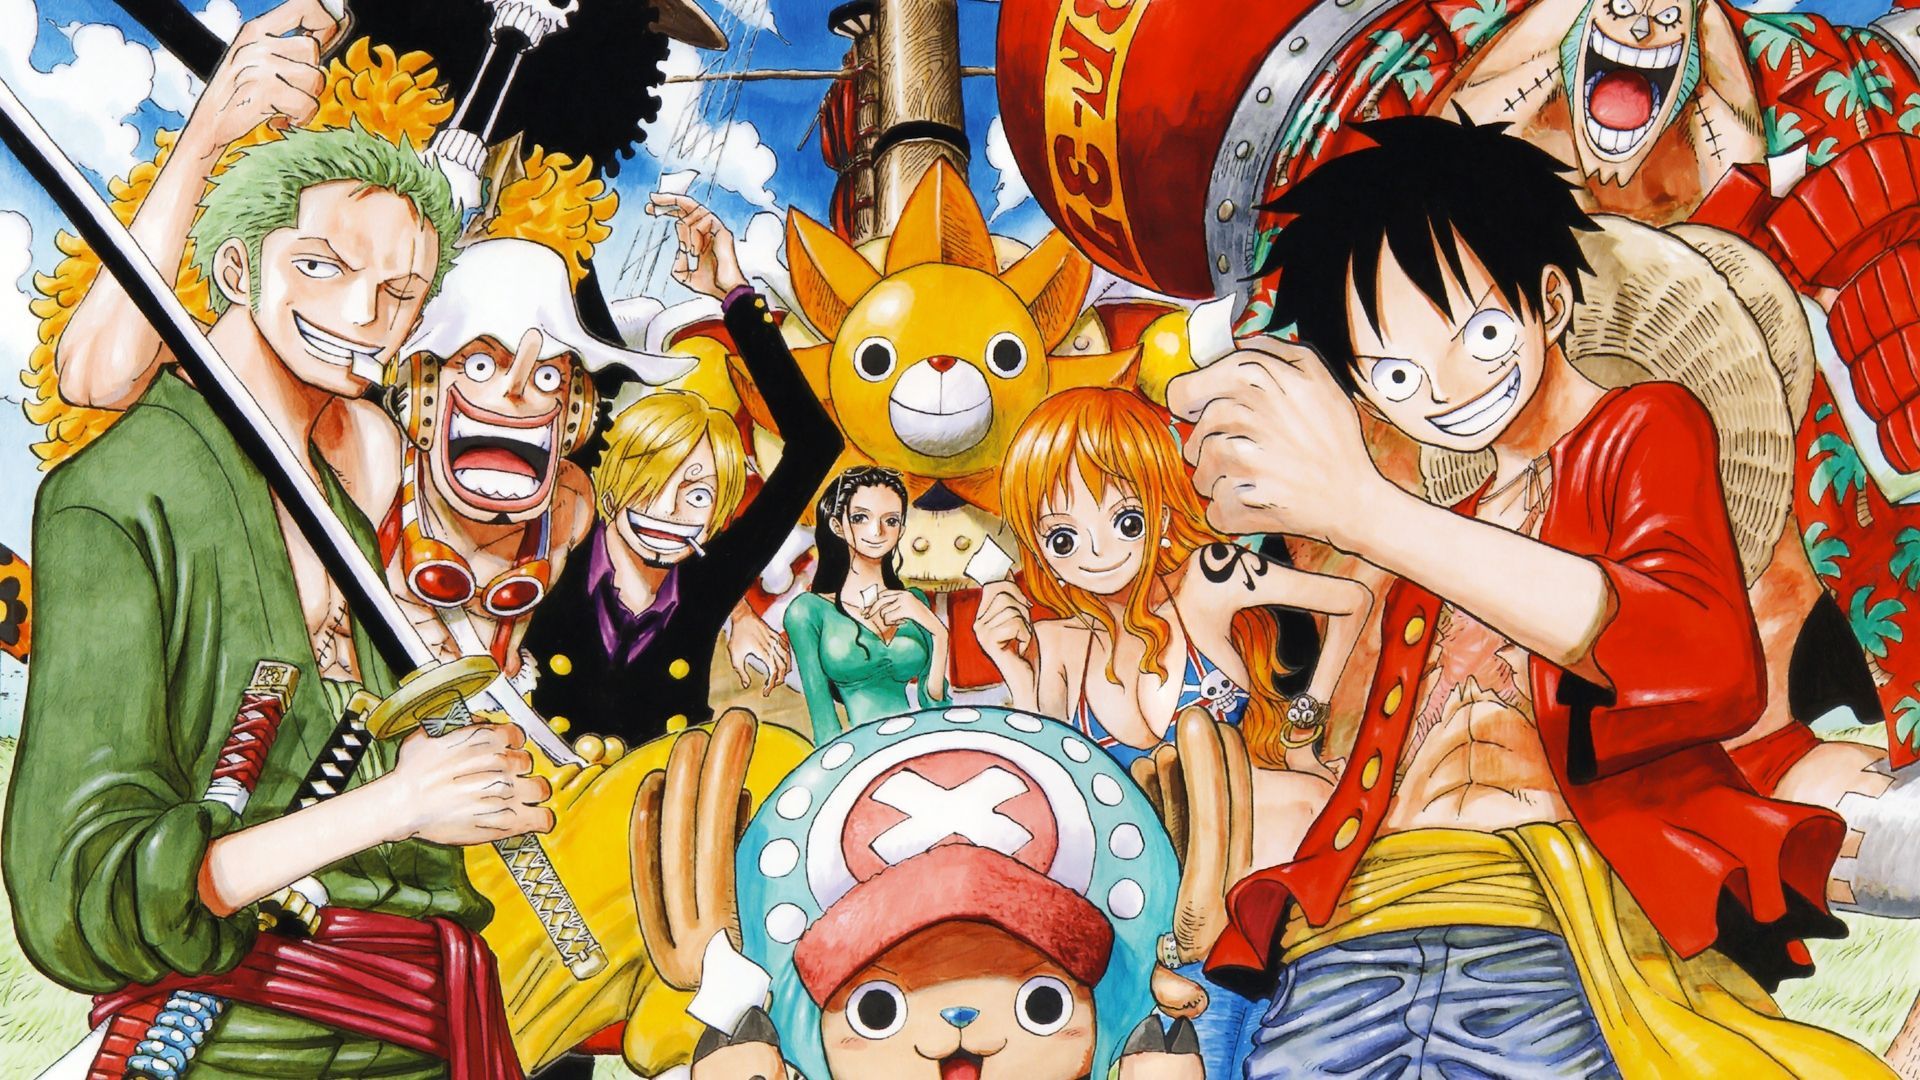 Fondos de pantalla de One Piece - FondosMil